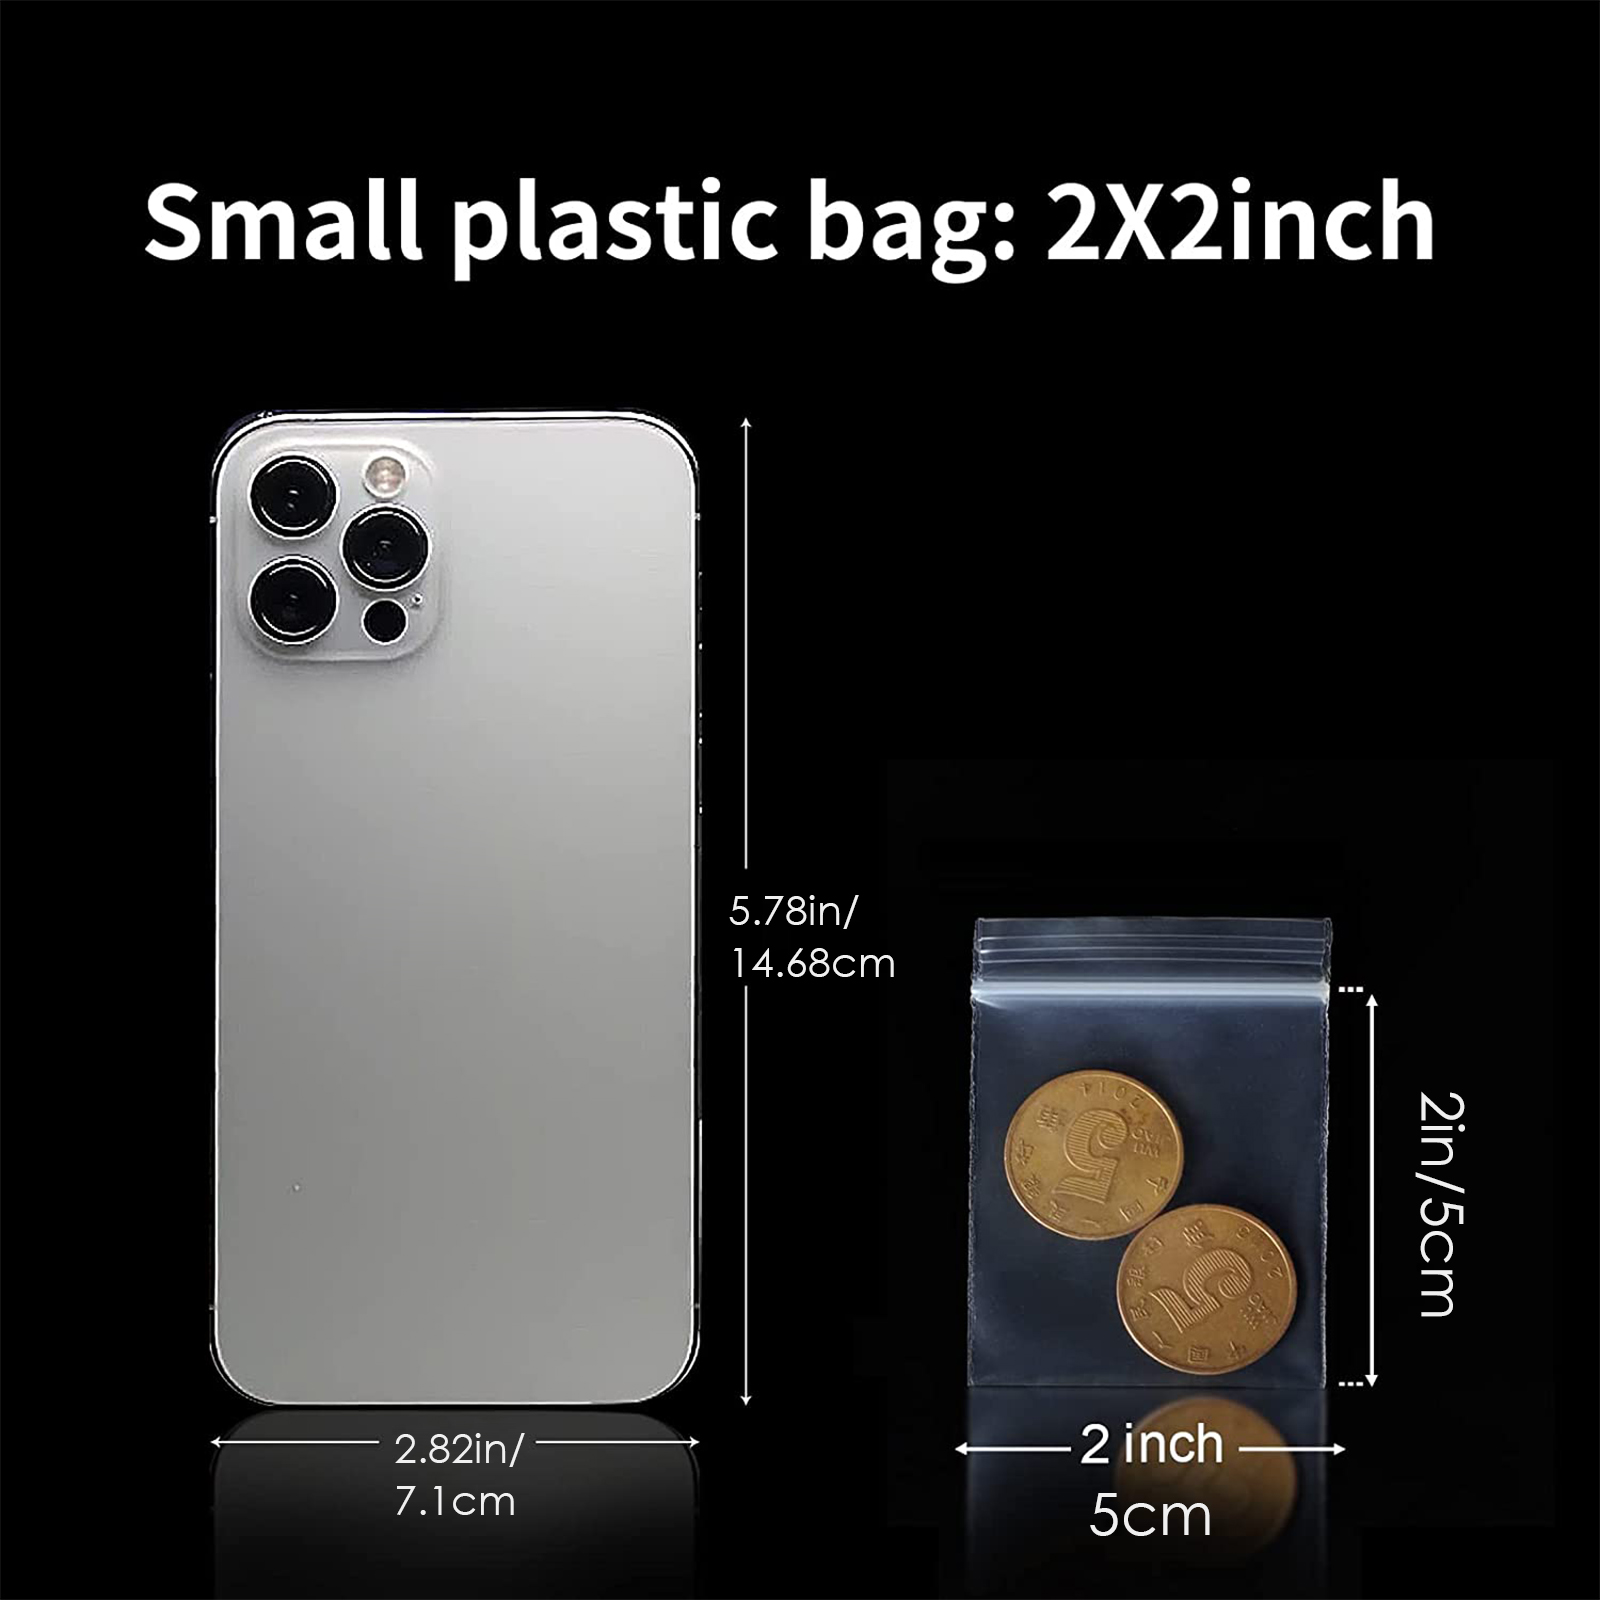 Zip Top 2mil Poly Bags 2x2 (100-Pcs)